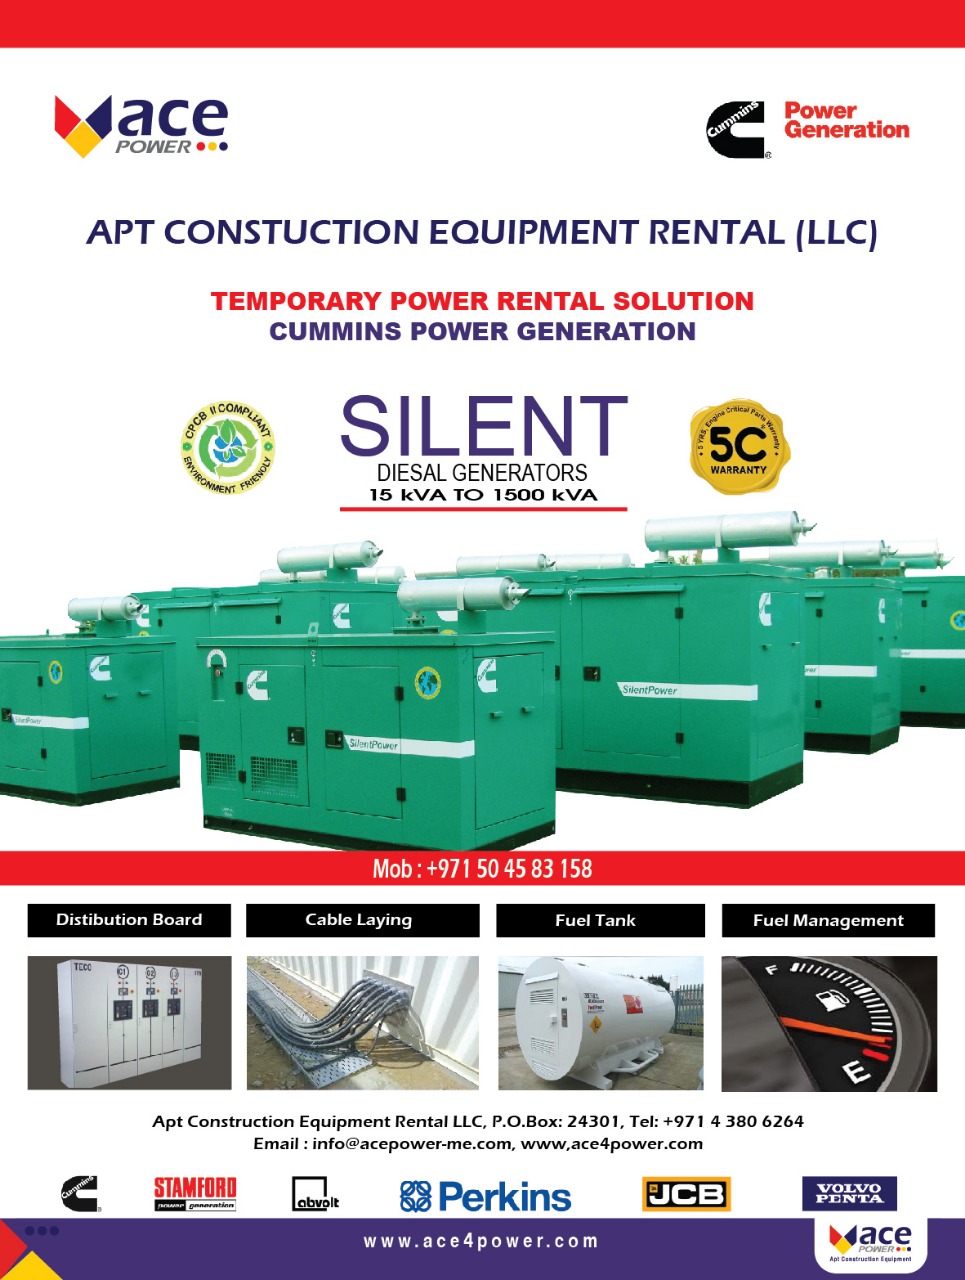 Ace Power (Apt Construction Equipment Rental LLC)